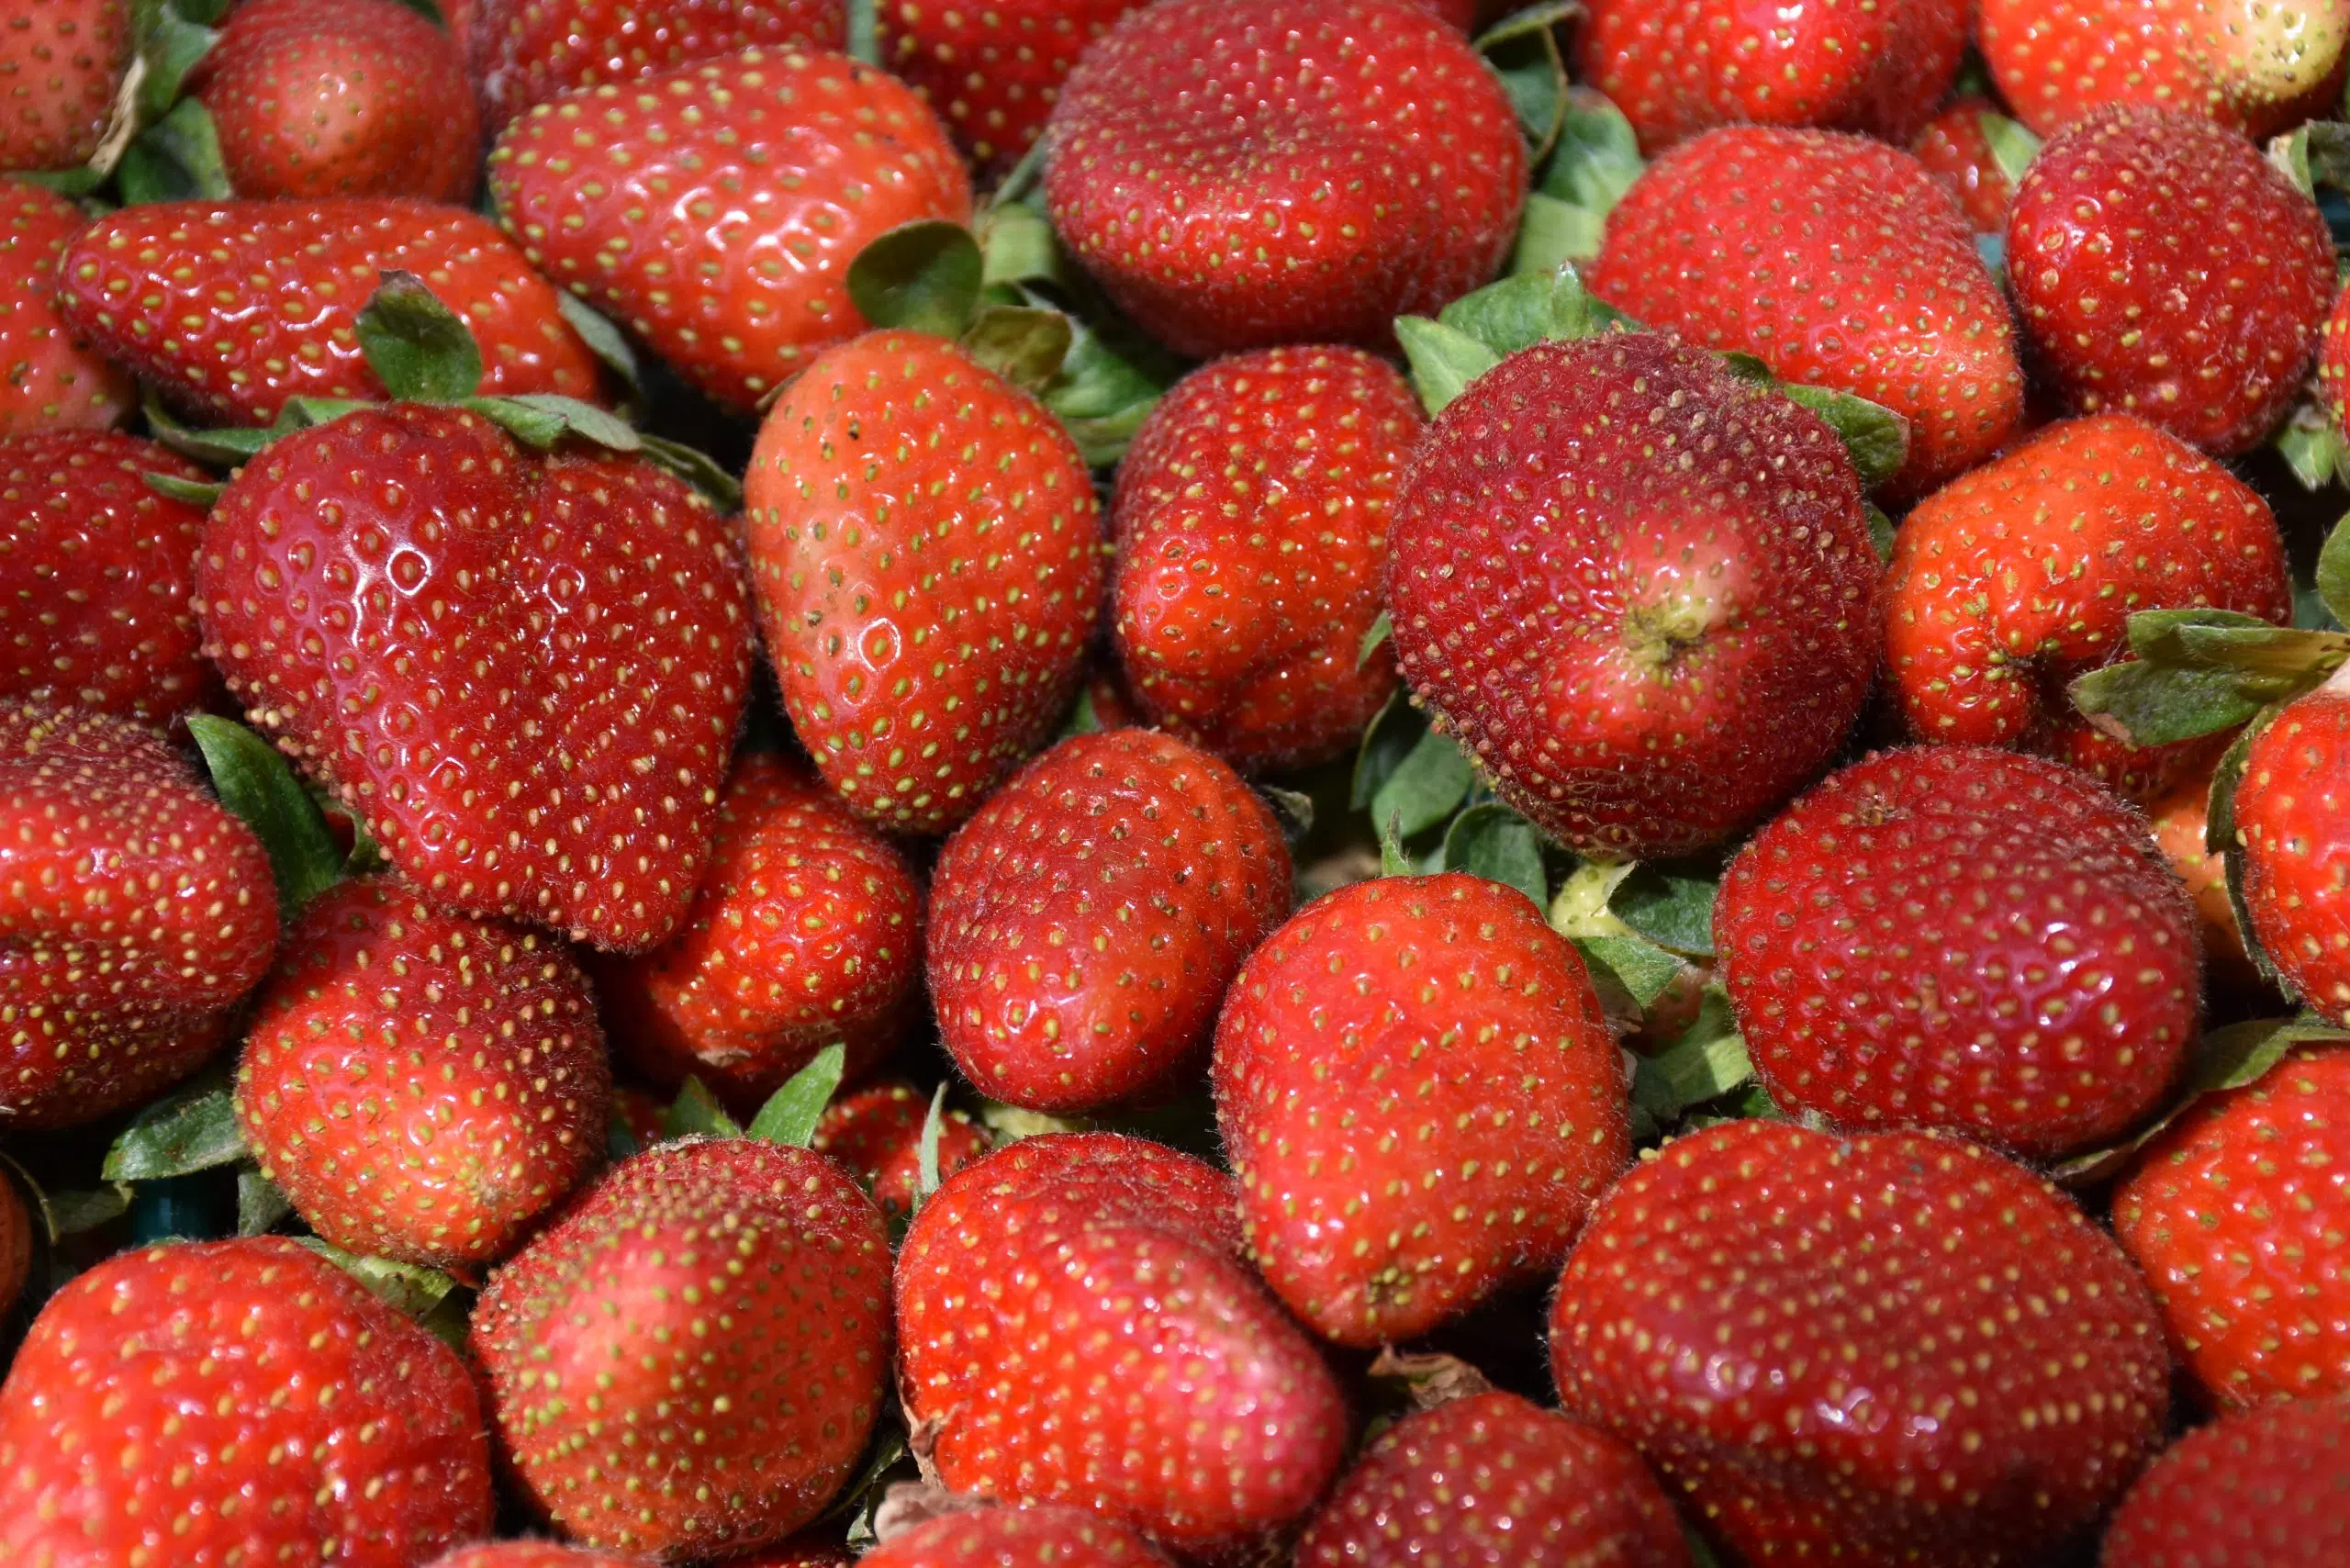 Louisiana strawberry crop looks promising in 2021